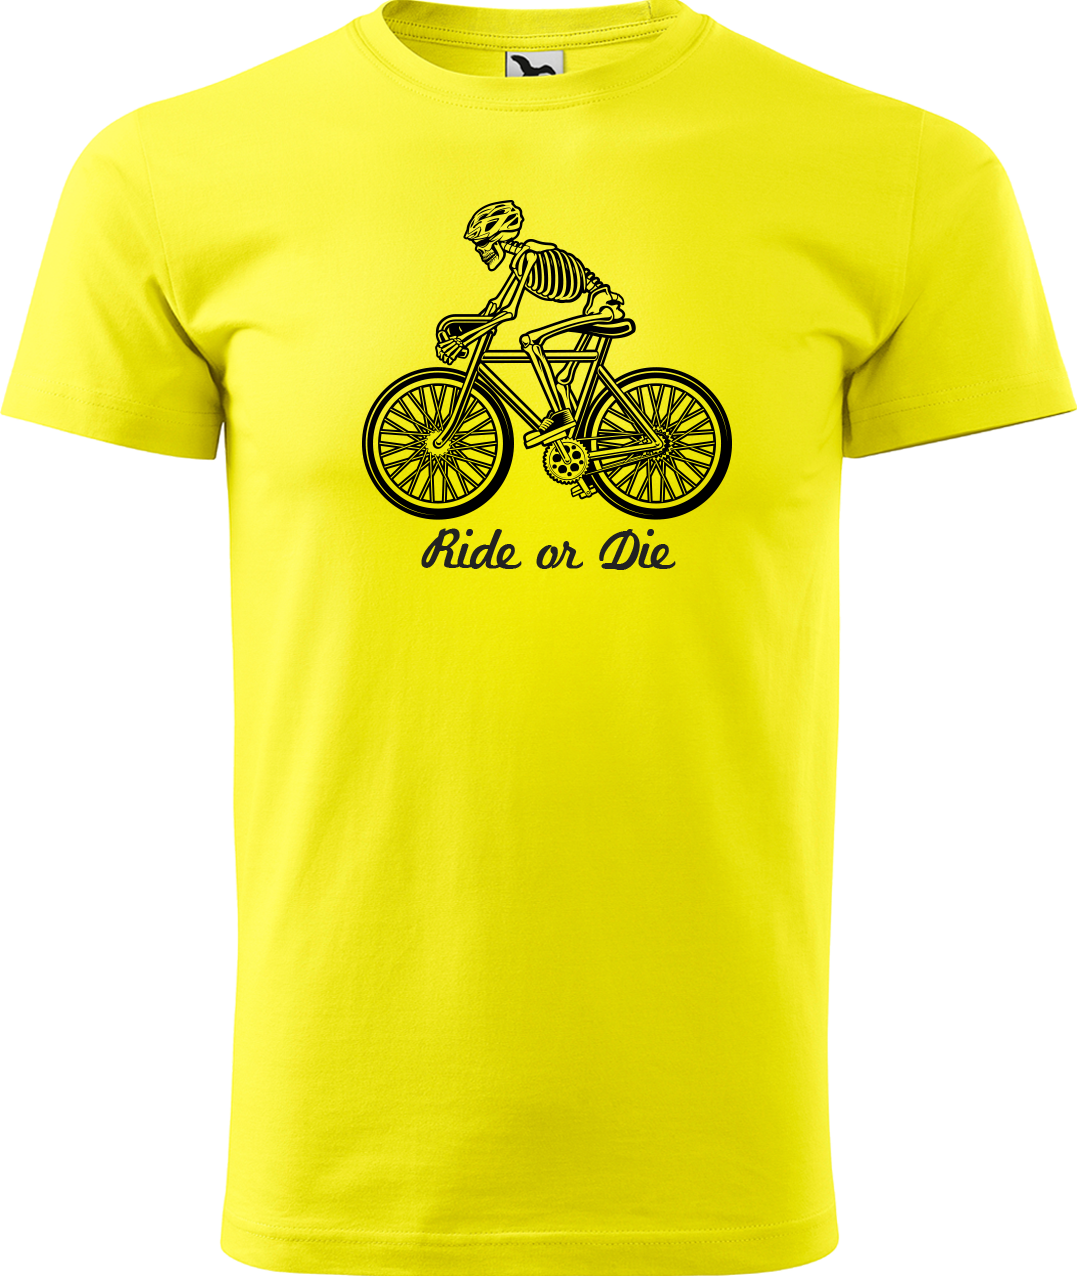 Pánské tričko pro cyklistu - Ride or Die Velikost: S, Barva: Žlutá (04)